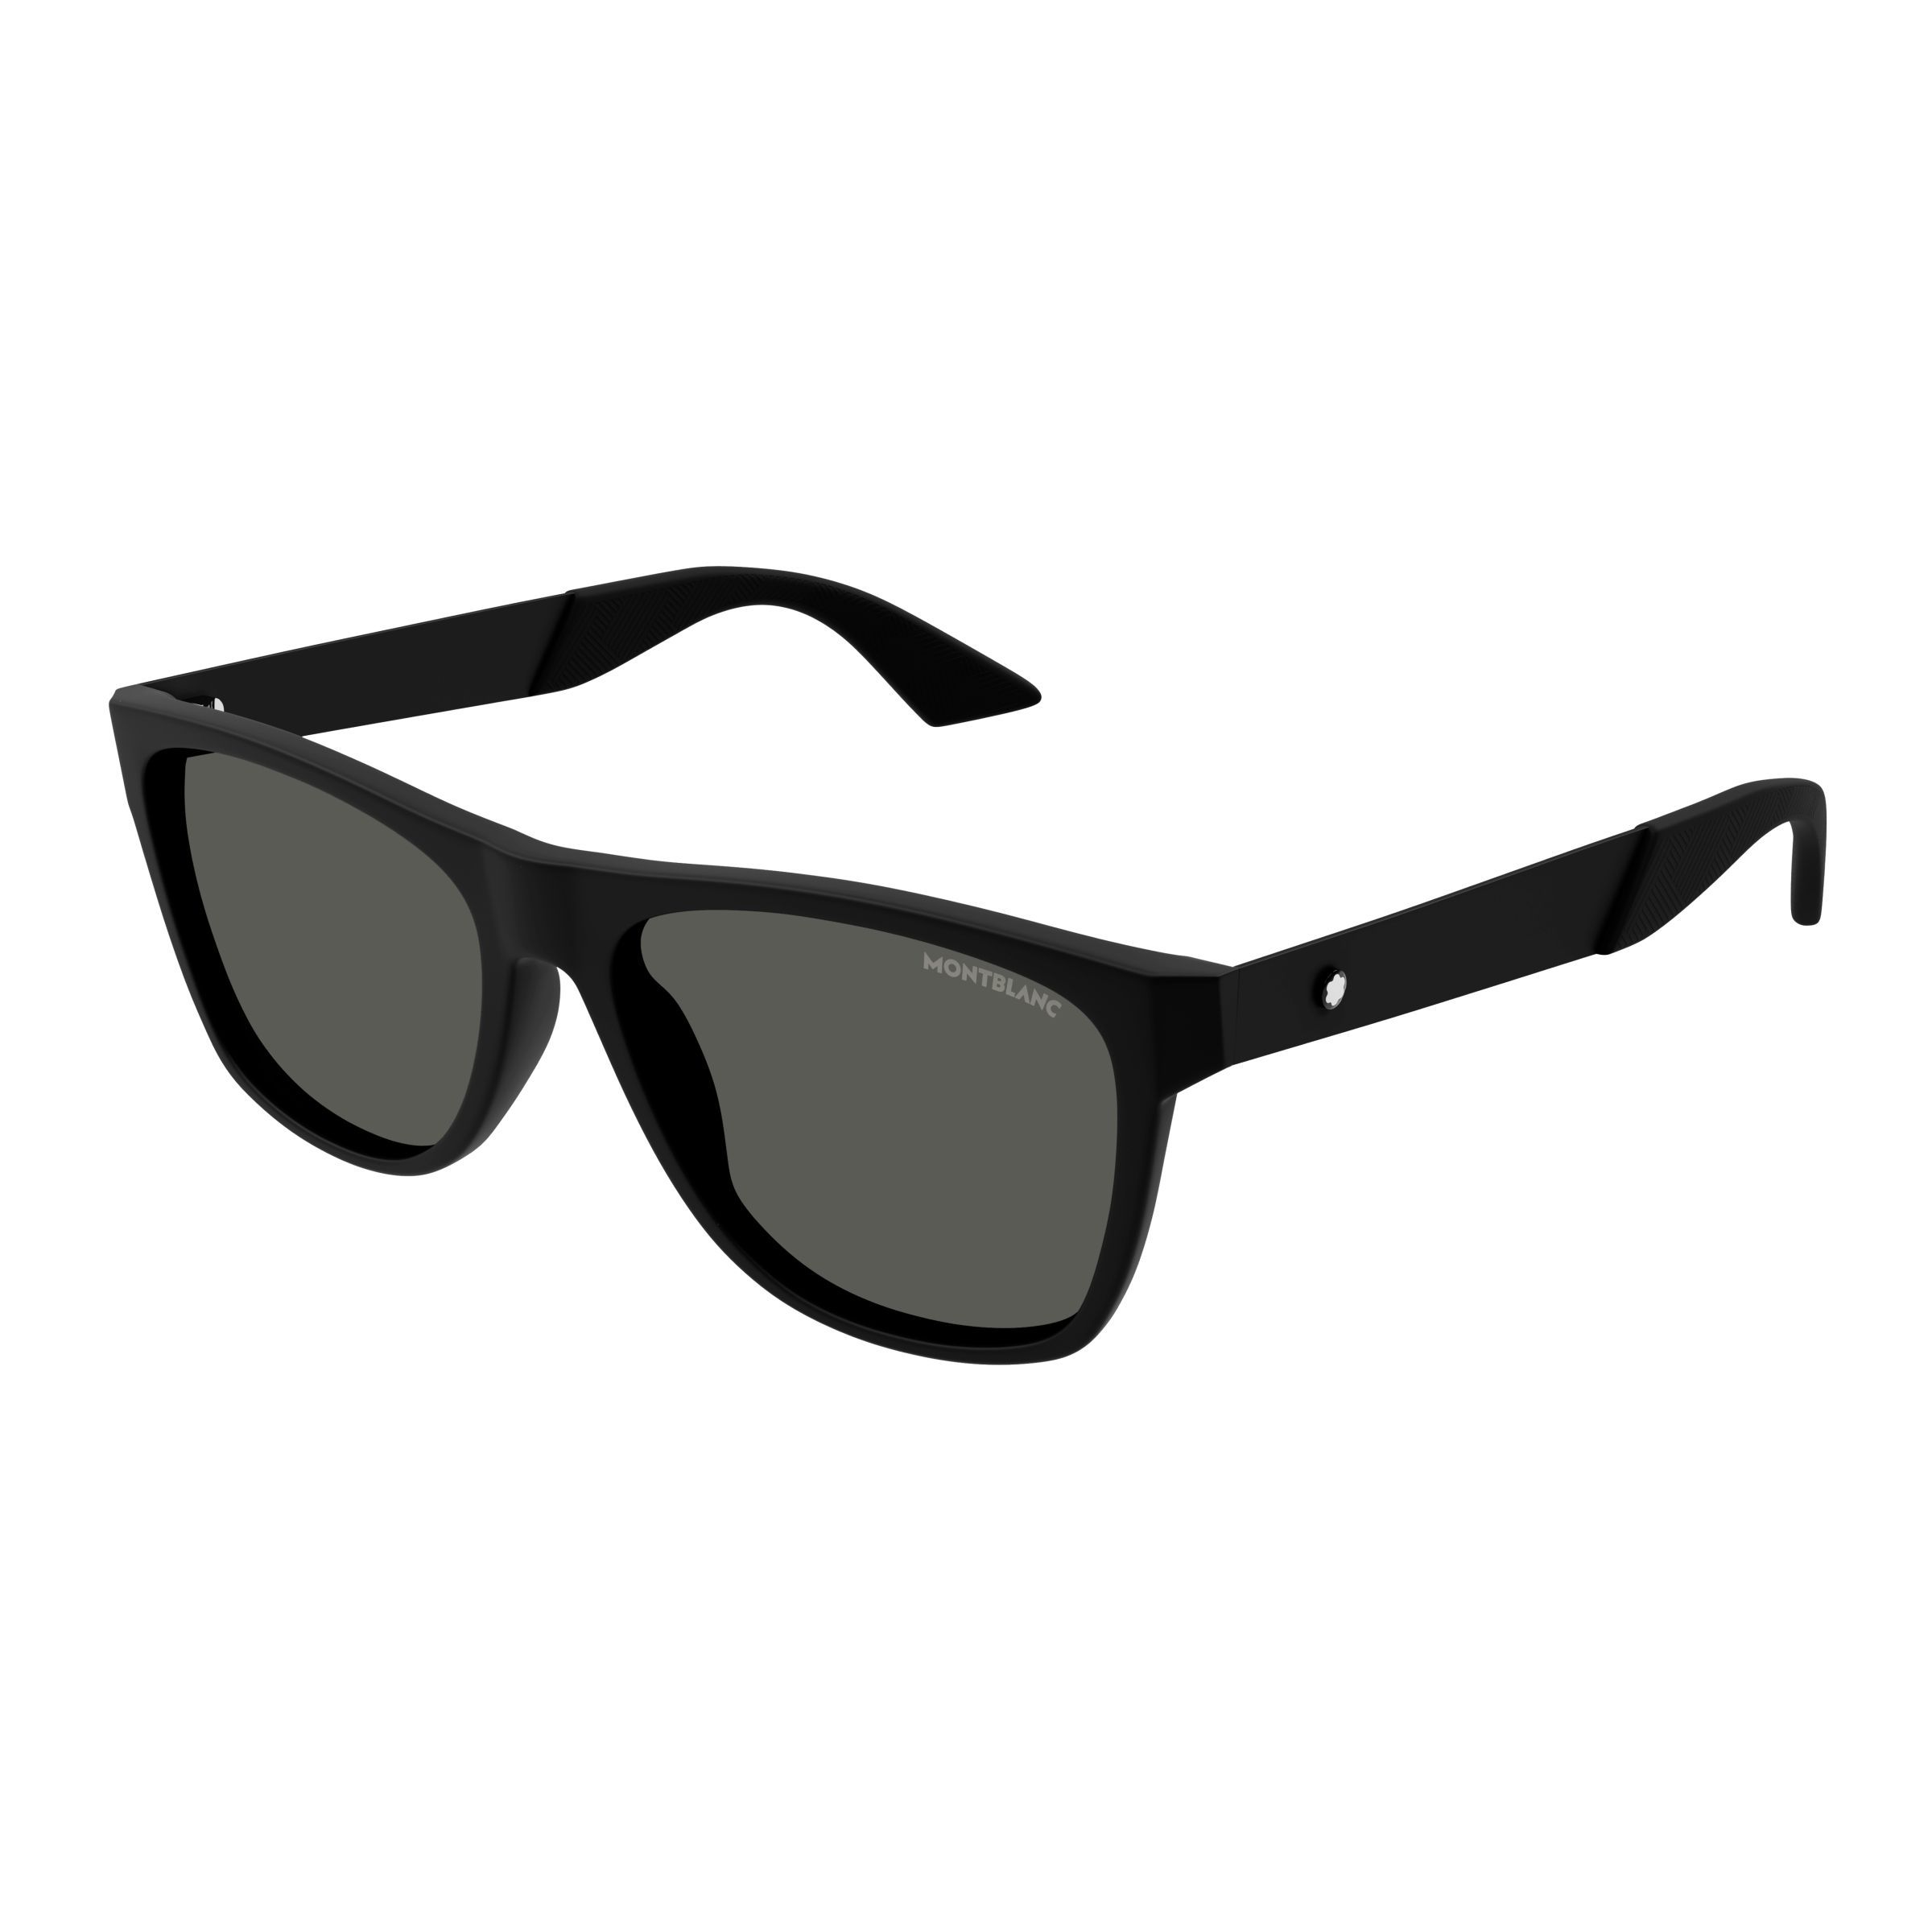 MB0298S Square Sunglasses 005 - size 56